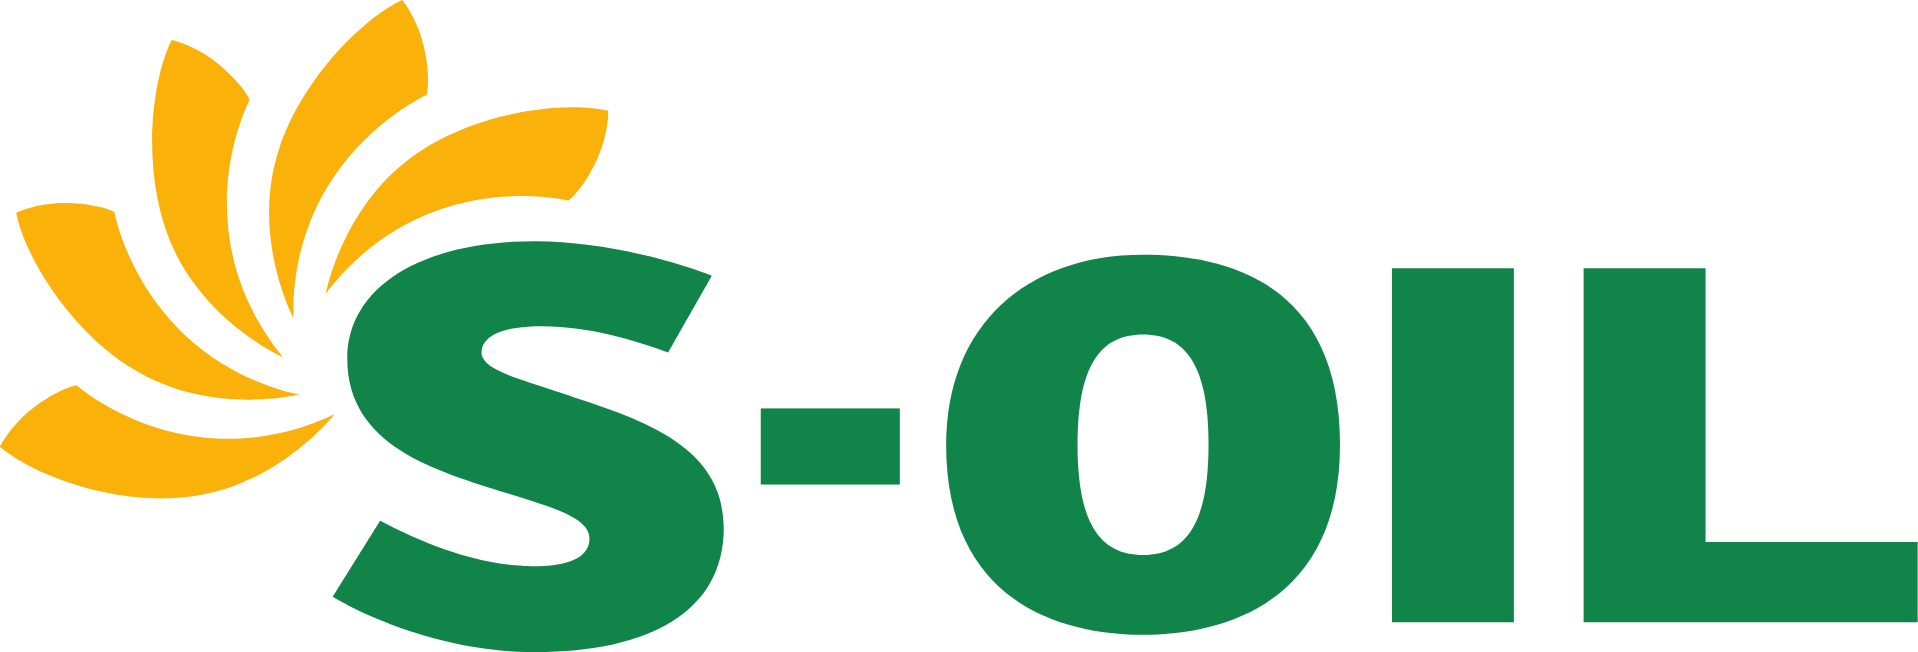 S-OIL logo large (transparent PNG)